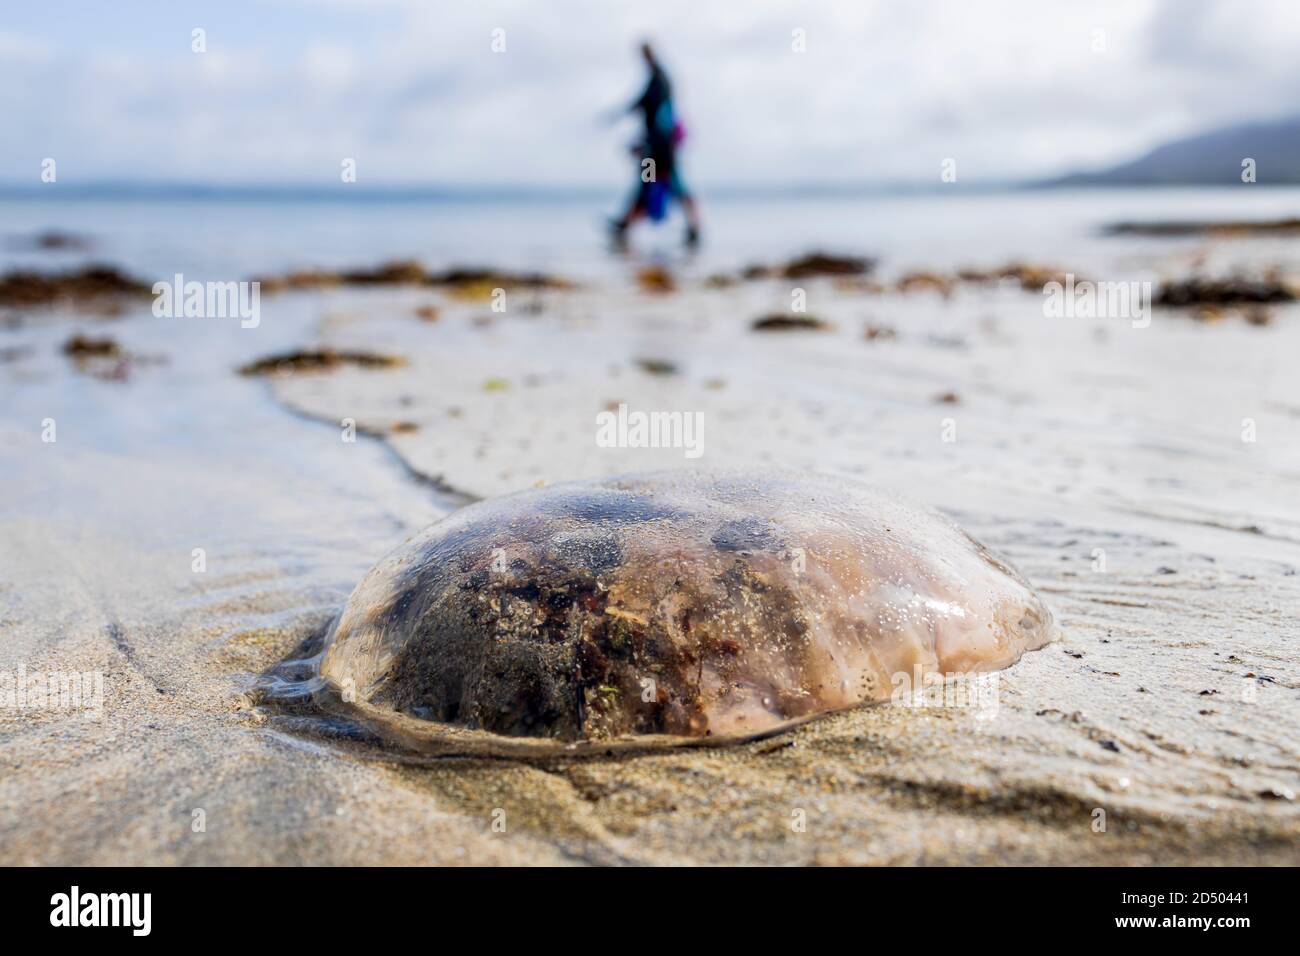 Compass Jellyfish, Chrysaora hysoscella, on the sand at the Old Head beach in Louisburgh, County Mayo, Ireland Stock Photo